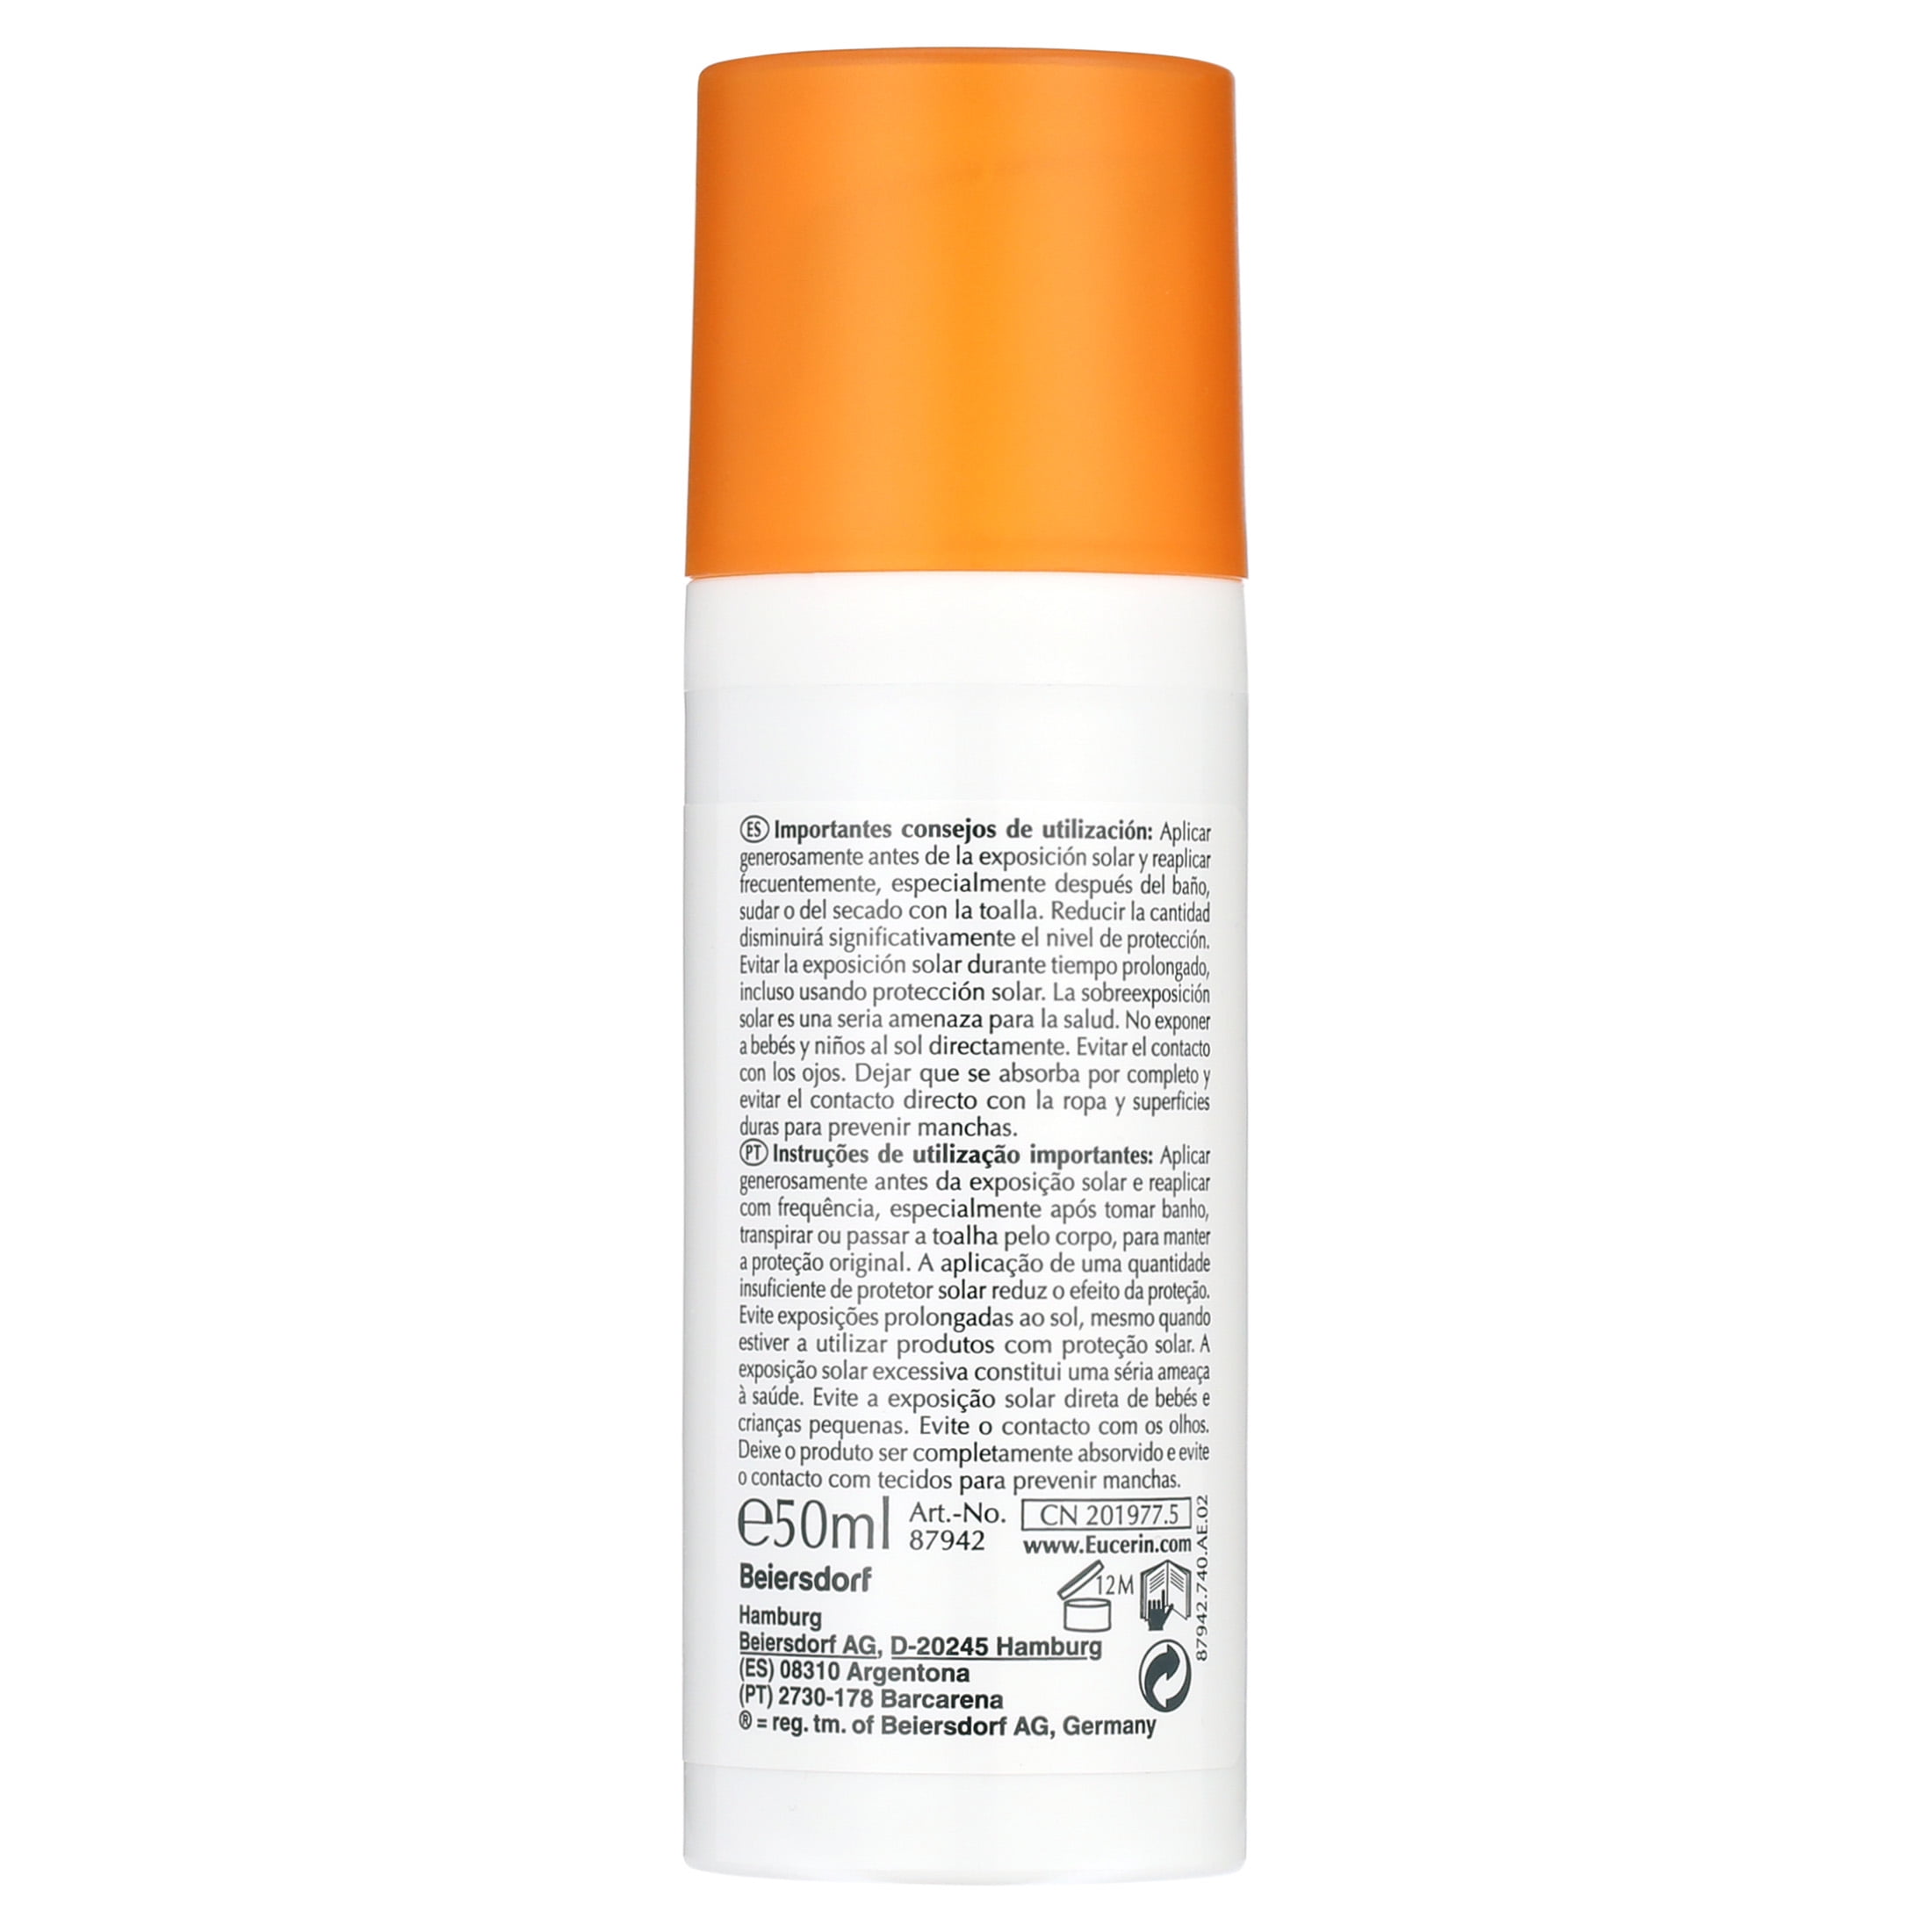 Eucerin Oil Control Dry Touch Sun Gel Cream Spf 50 in Wuse - Skincare,  Amaka